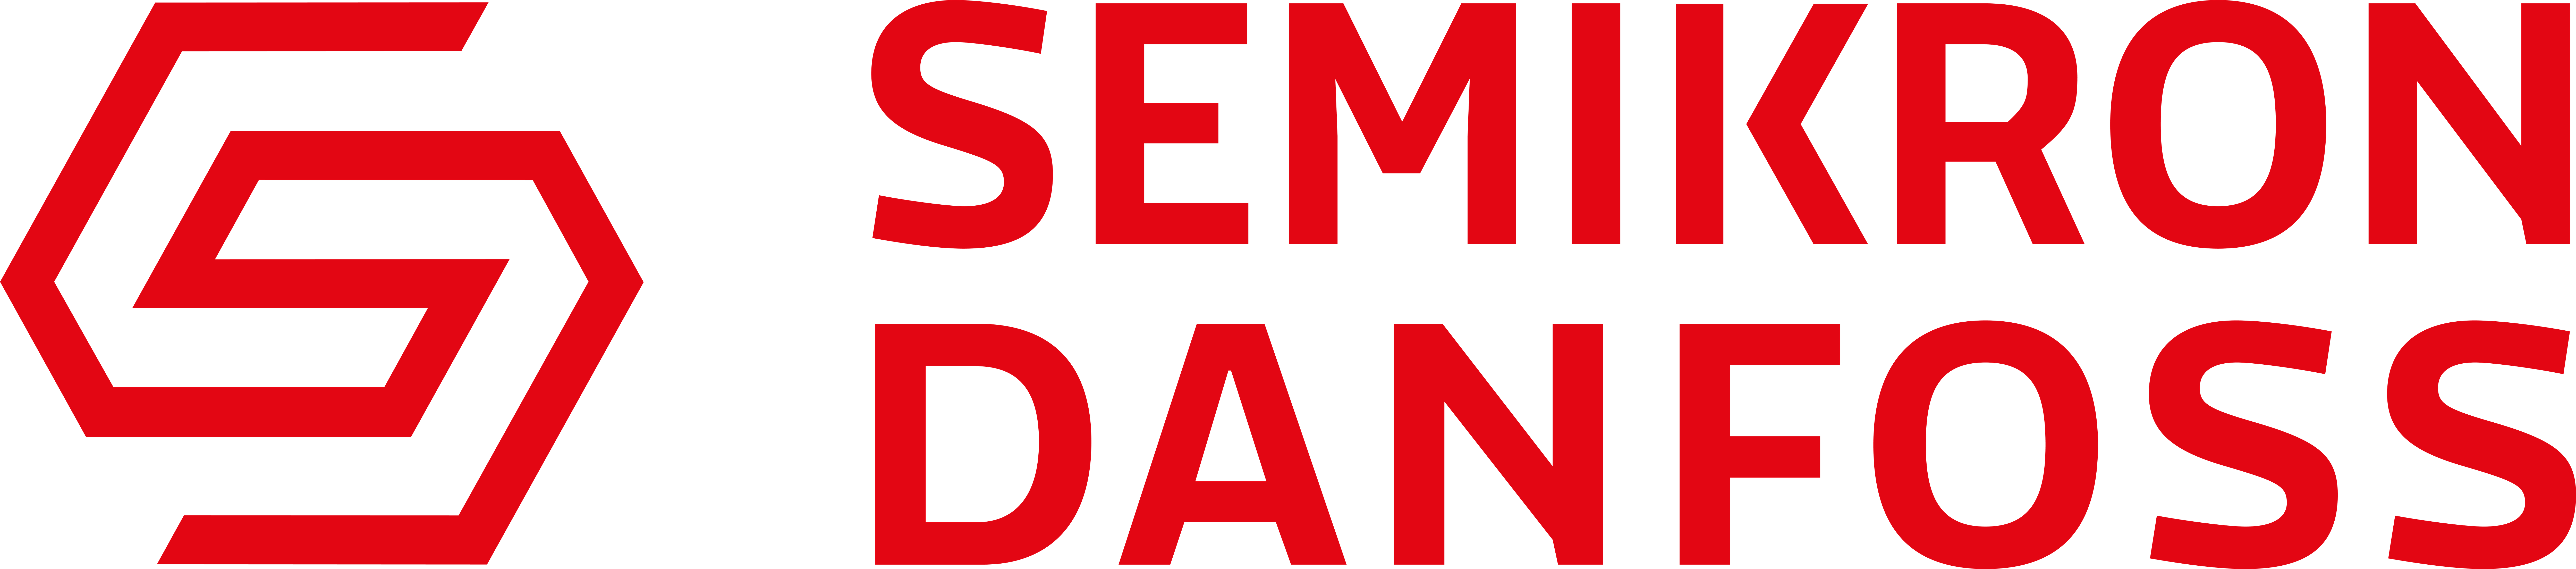 Co-Sponsor Danfoss Semikron